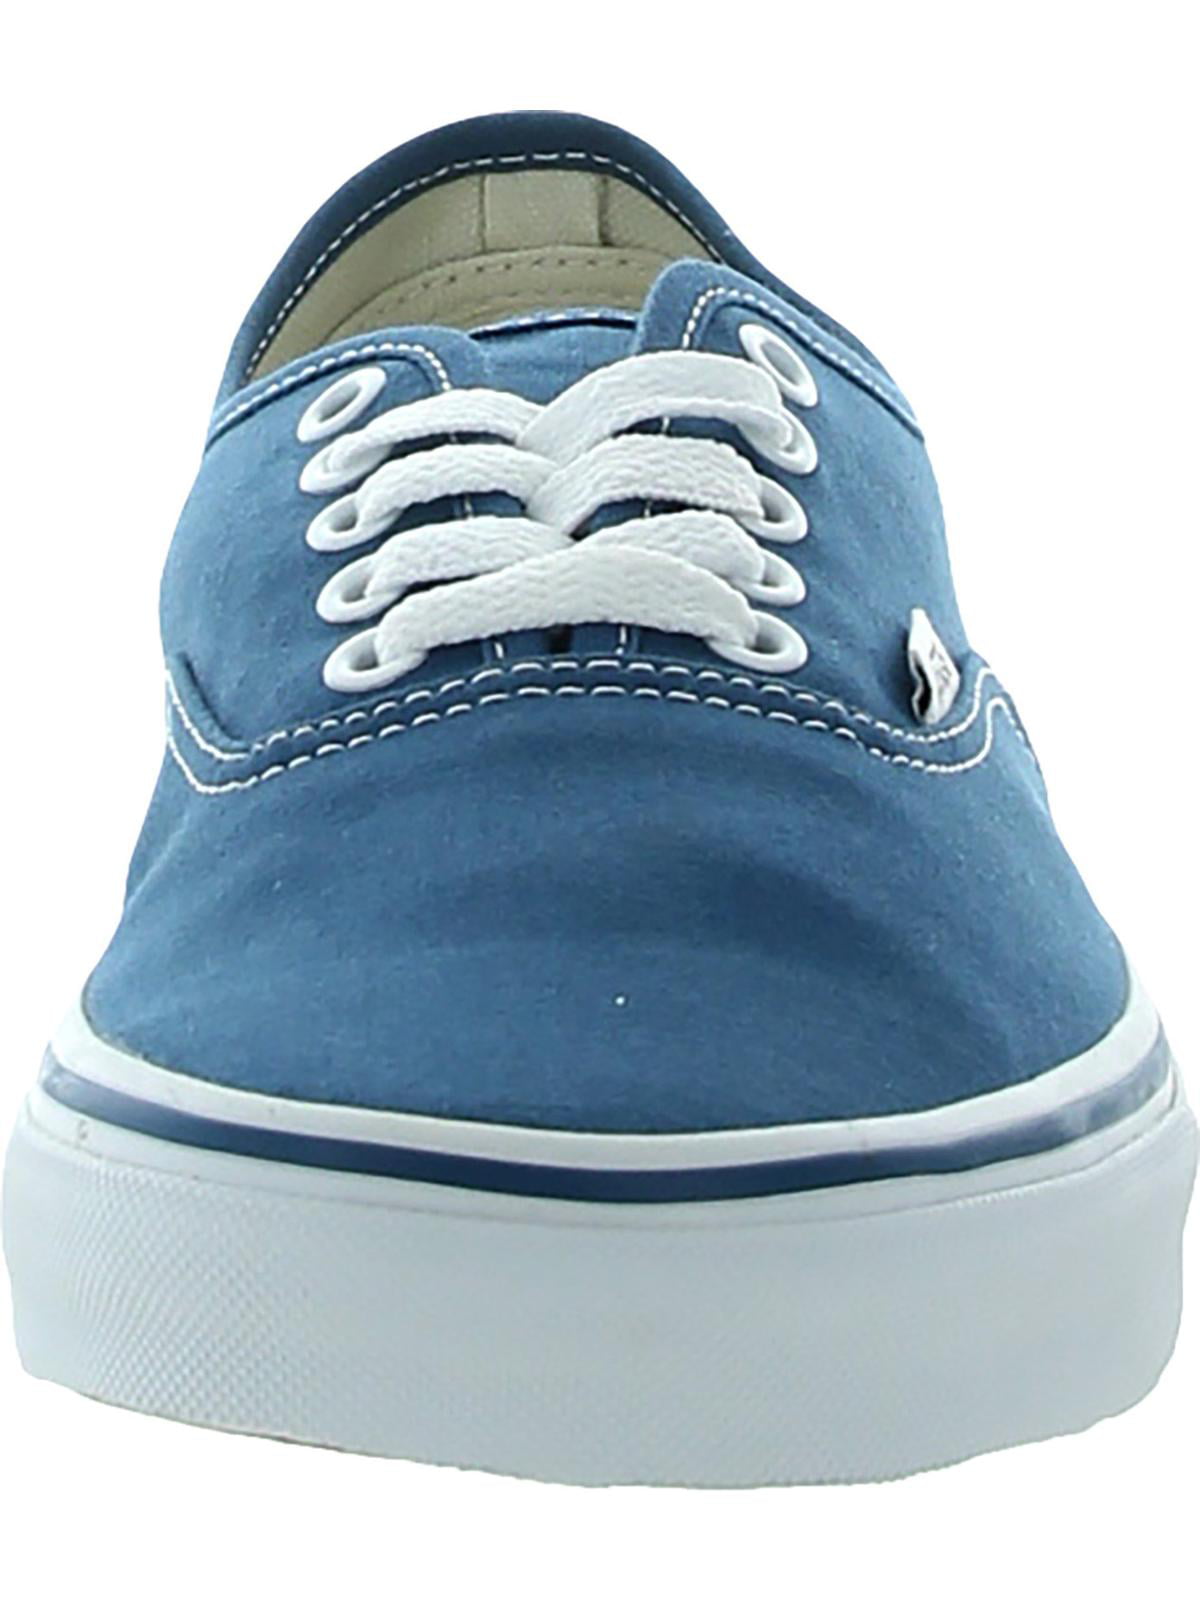 Authentic Vans Teal Blue Twill Canvas Leather Laces Sz M 9 W 10.5 Sneakers  Shoes